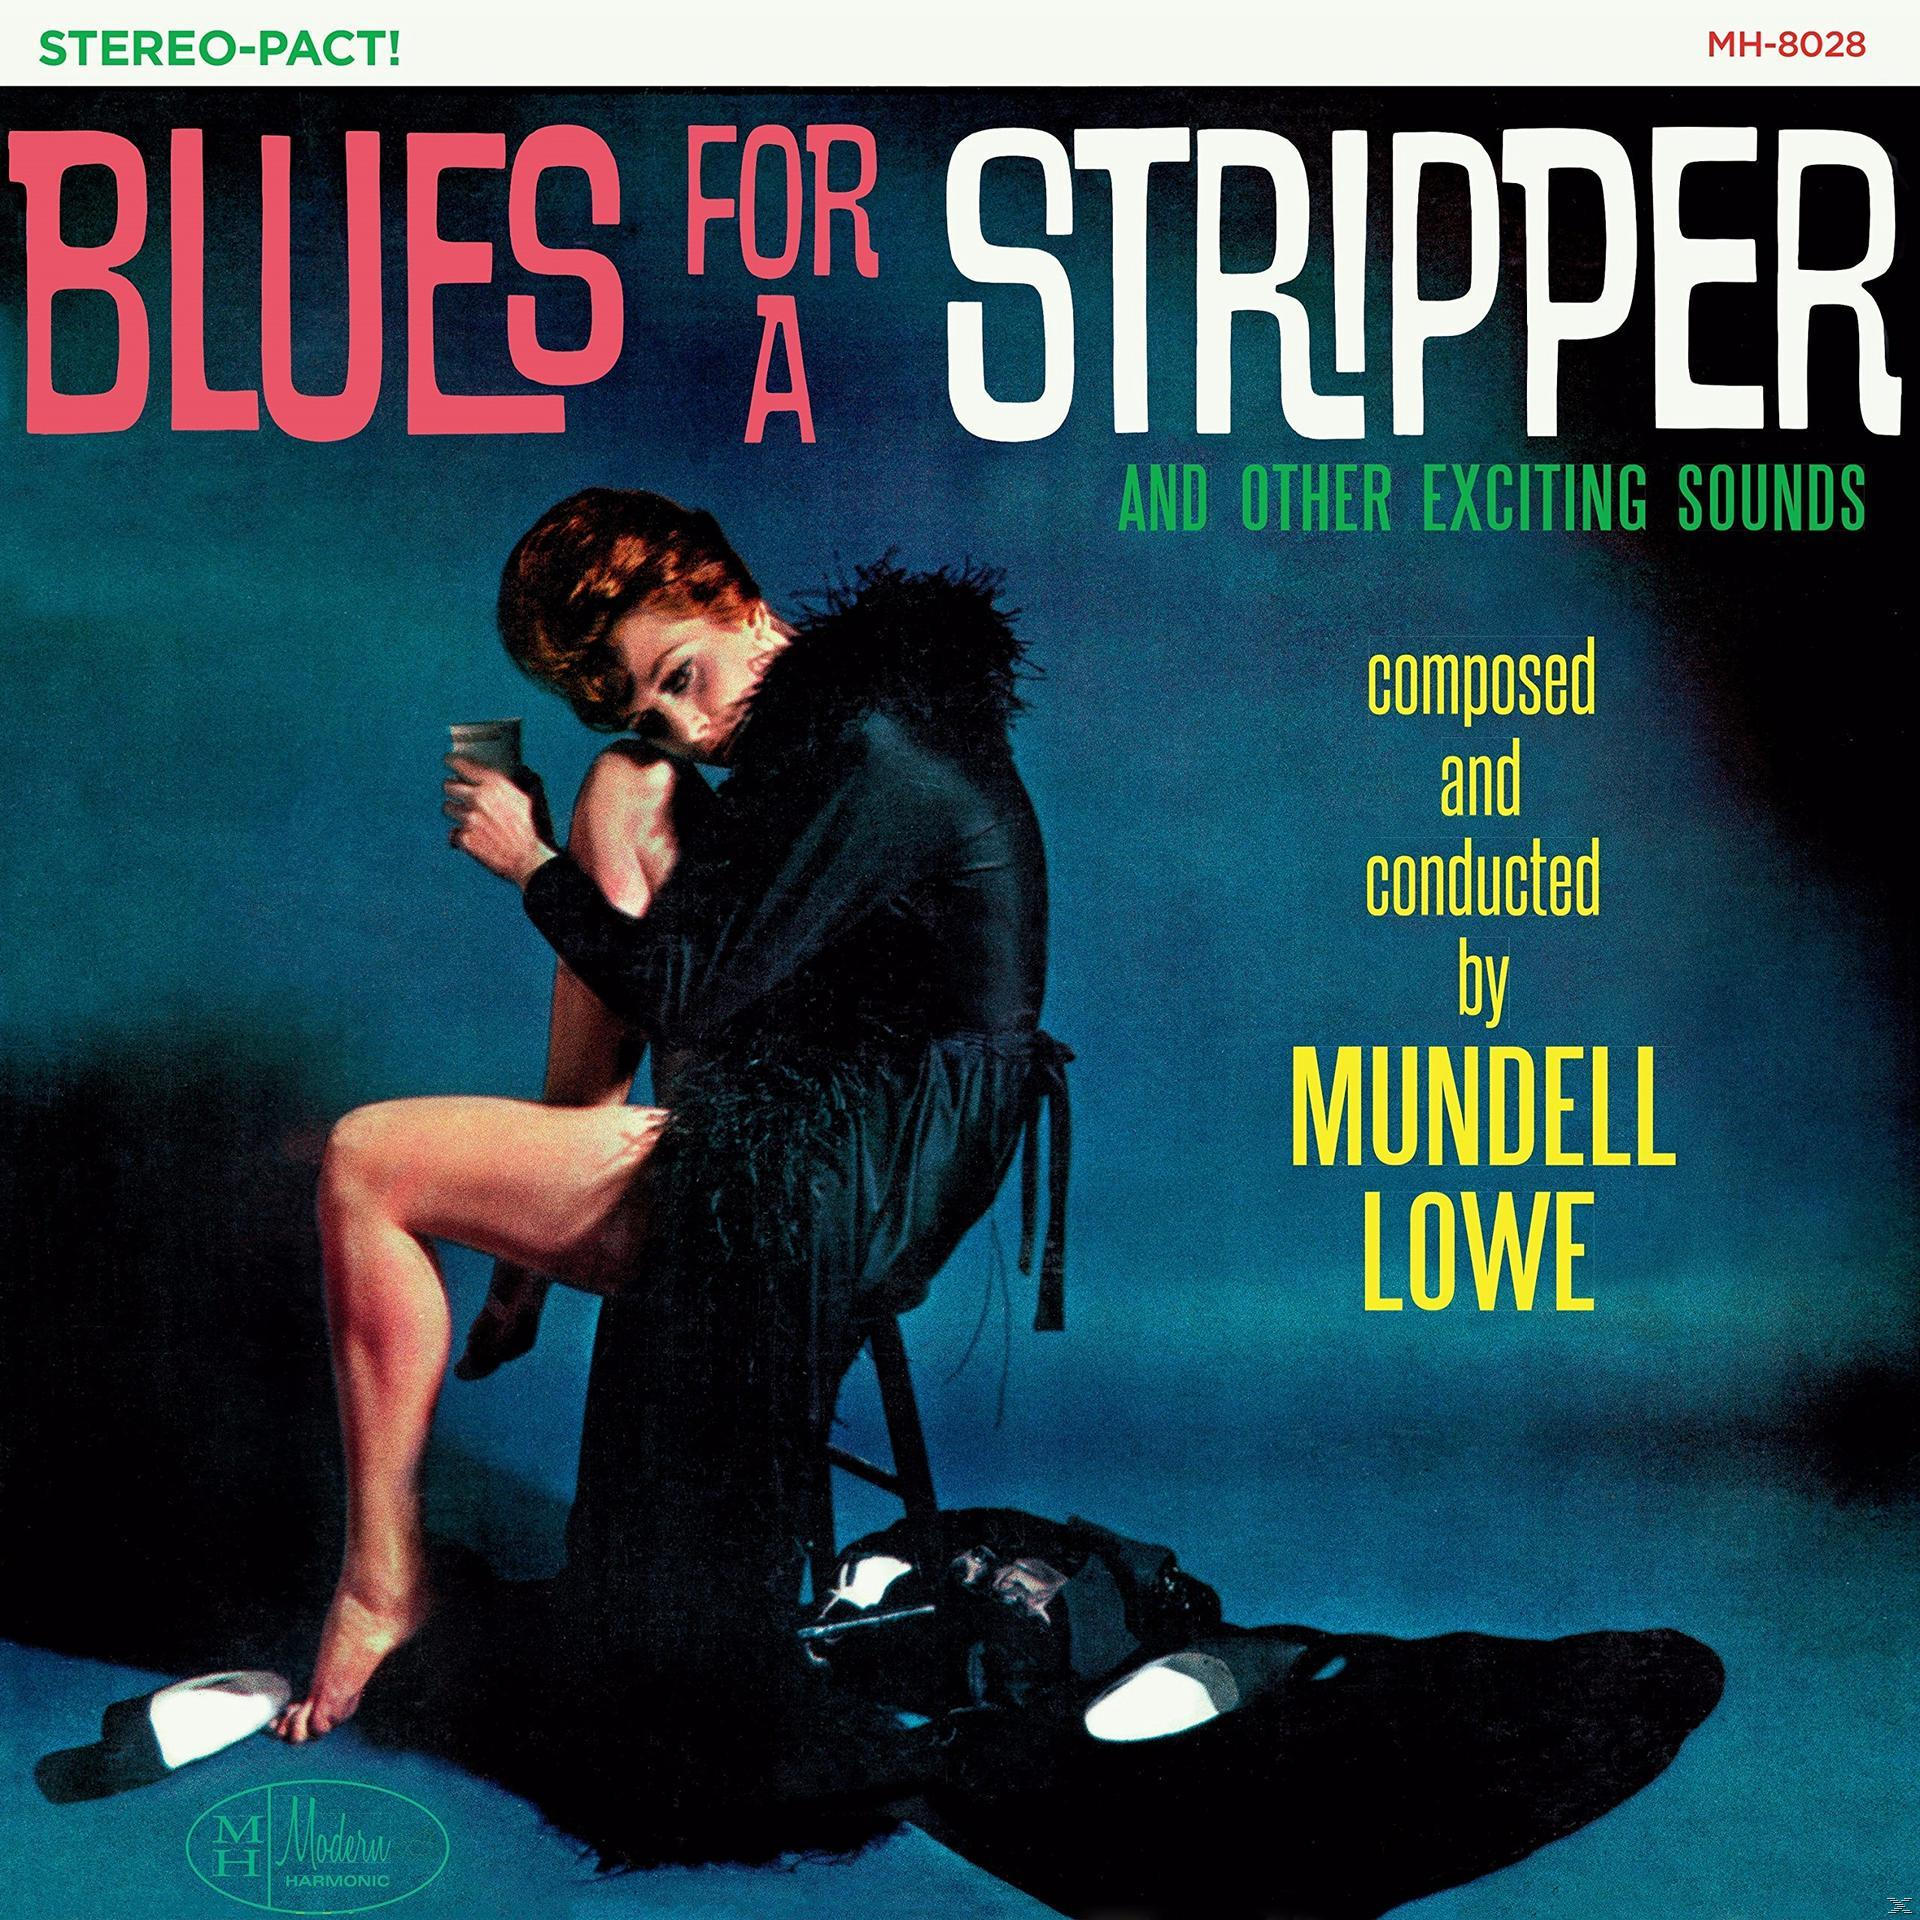 Mundell Lowe - For - Stripper Blues A (Vinyl)